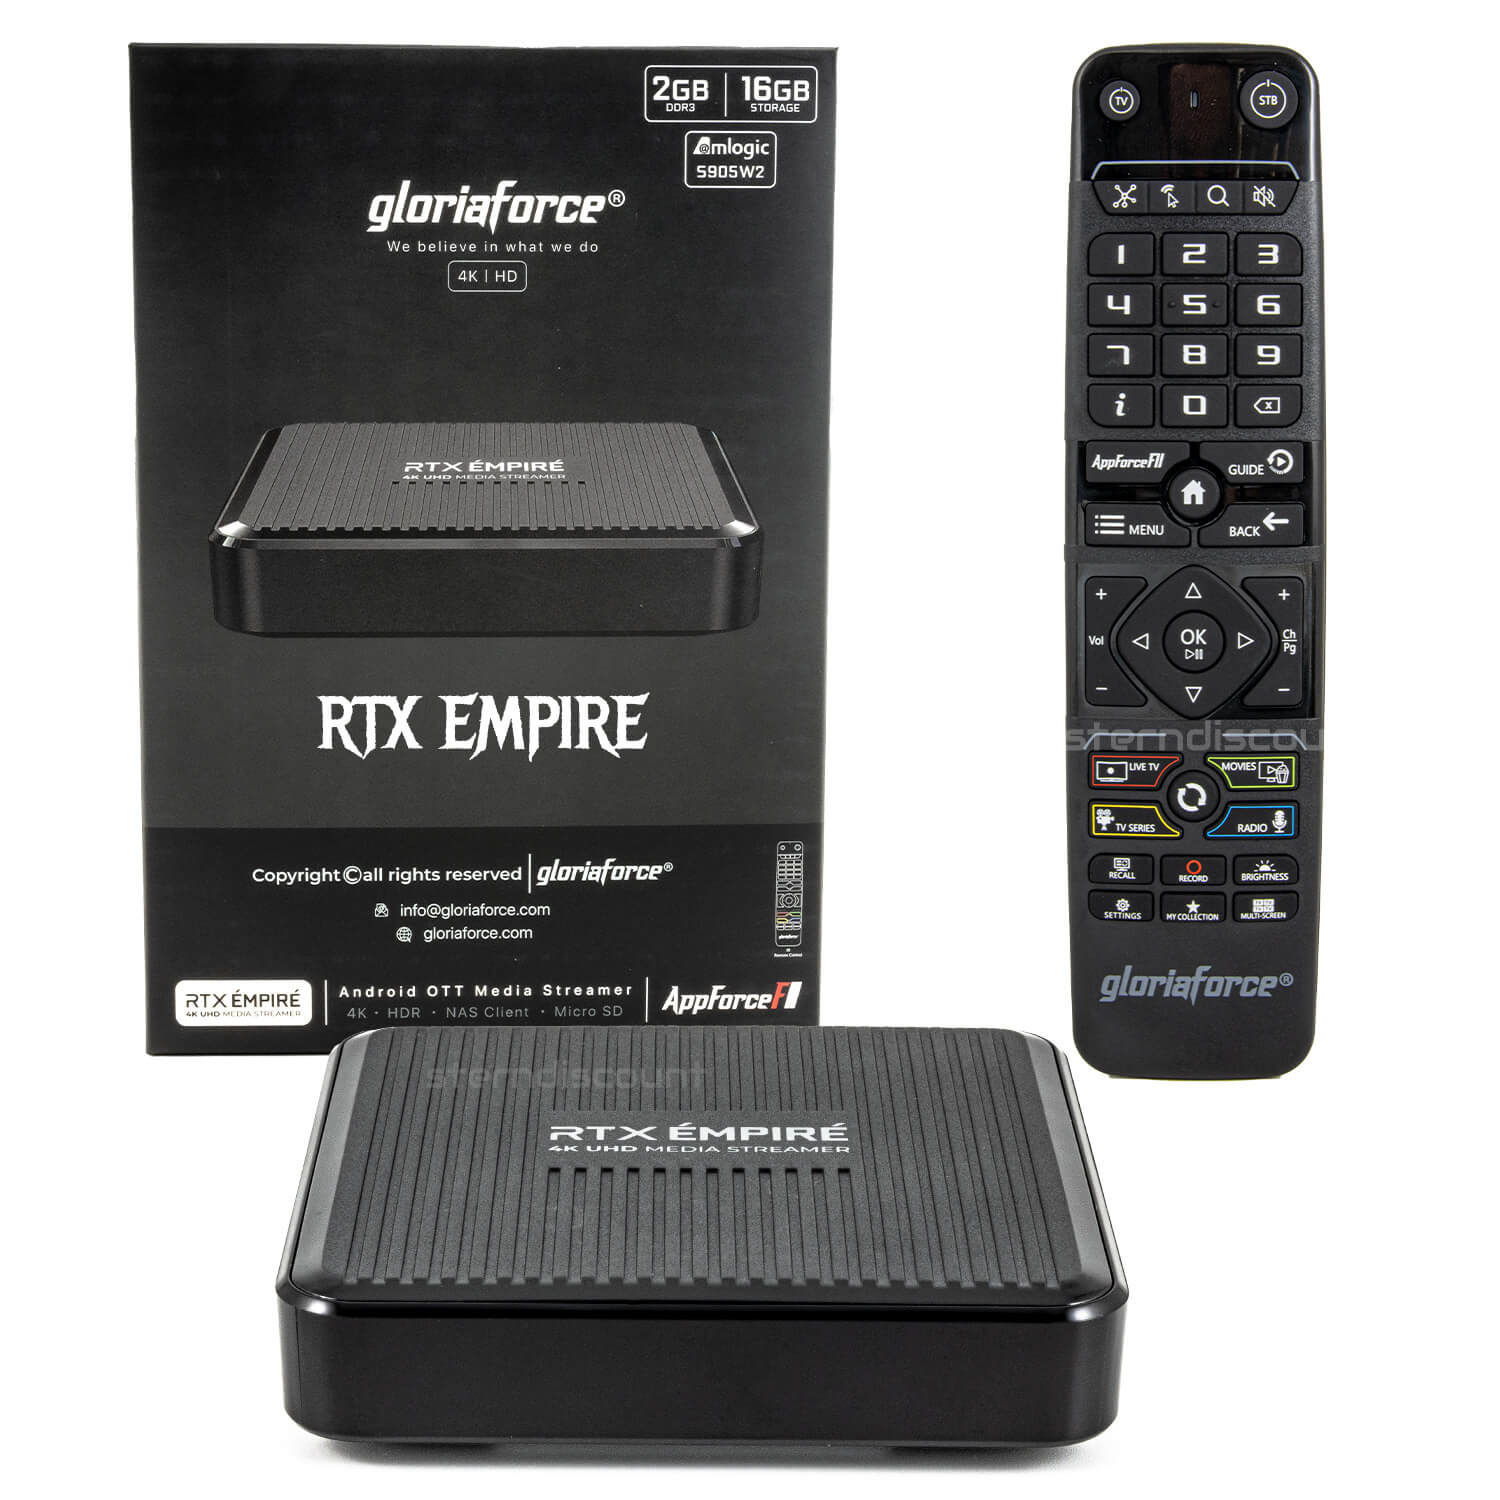 Gloriaforce-RTX-Empire-ip-tv-box-4k-2-gb-ram